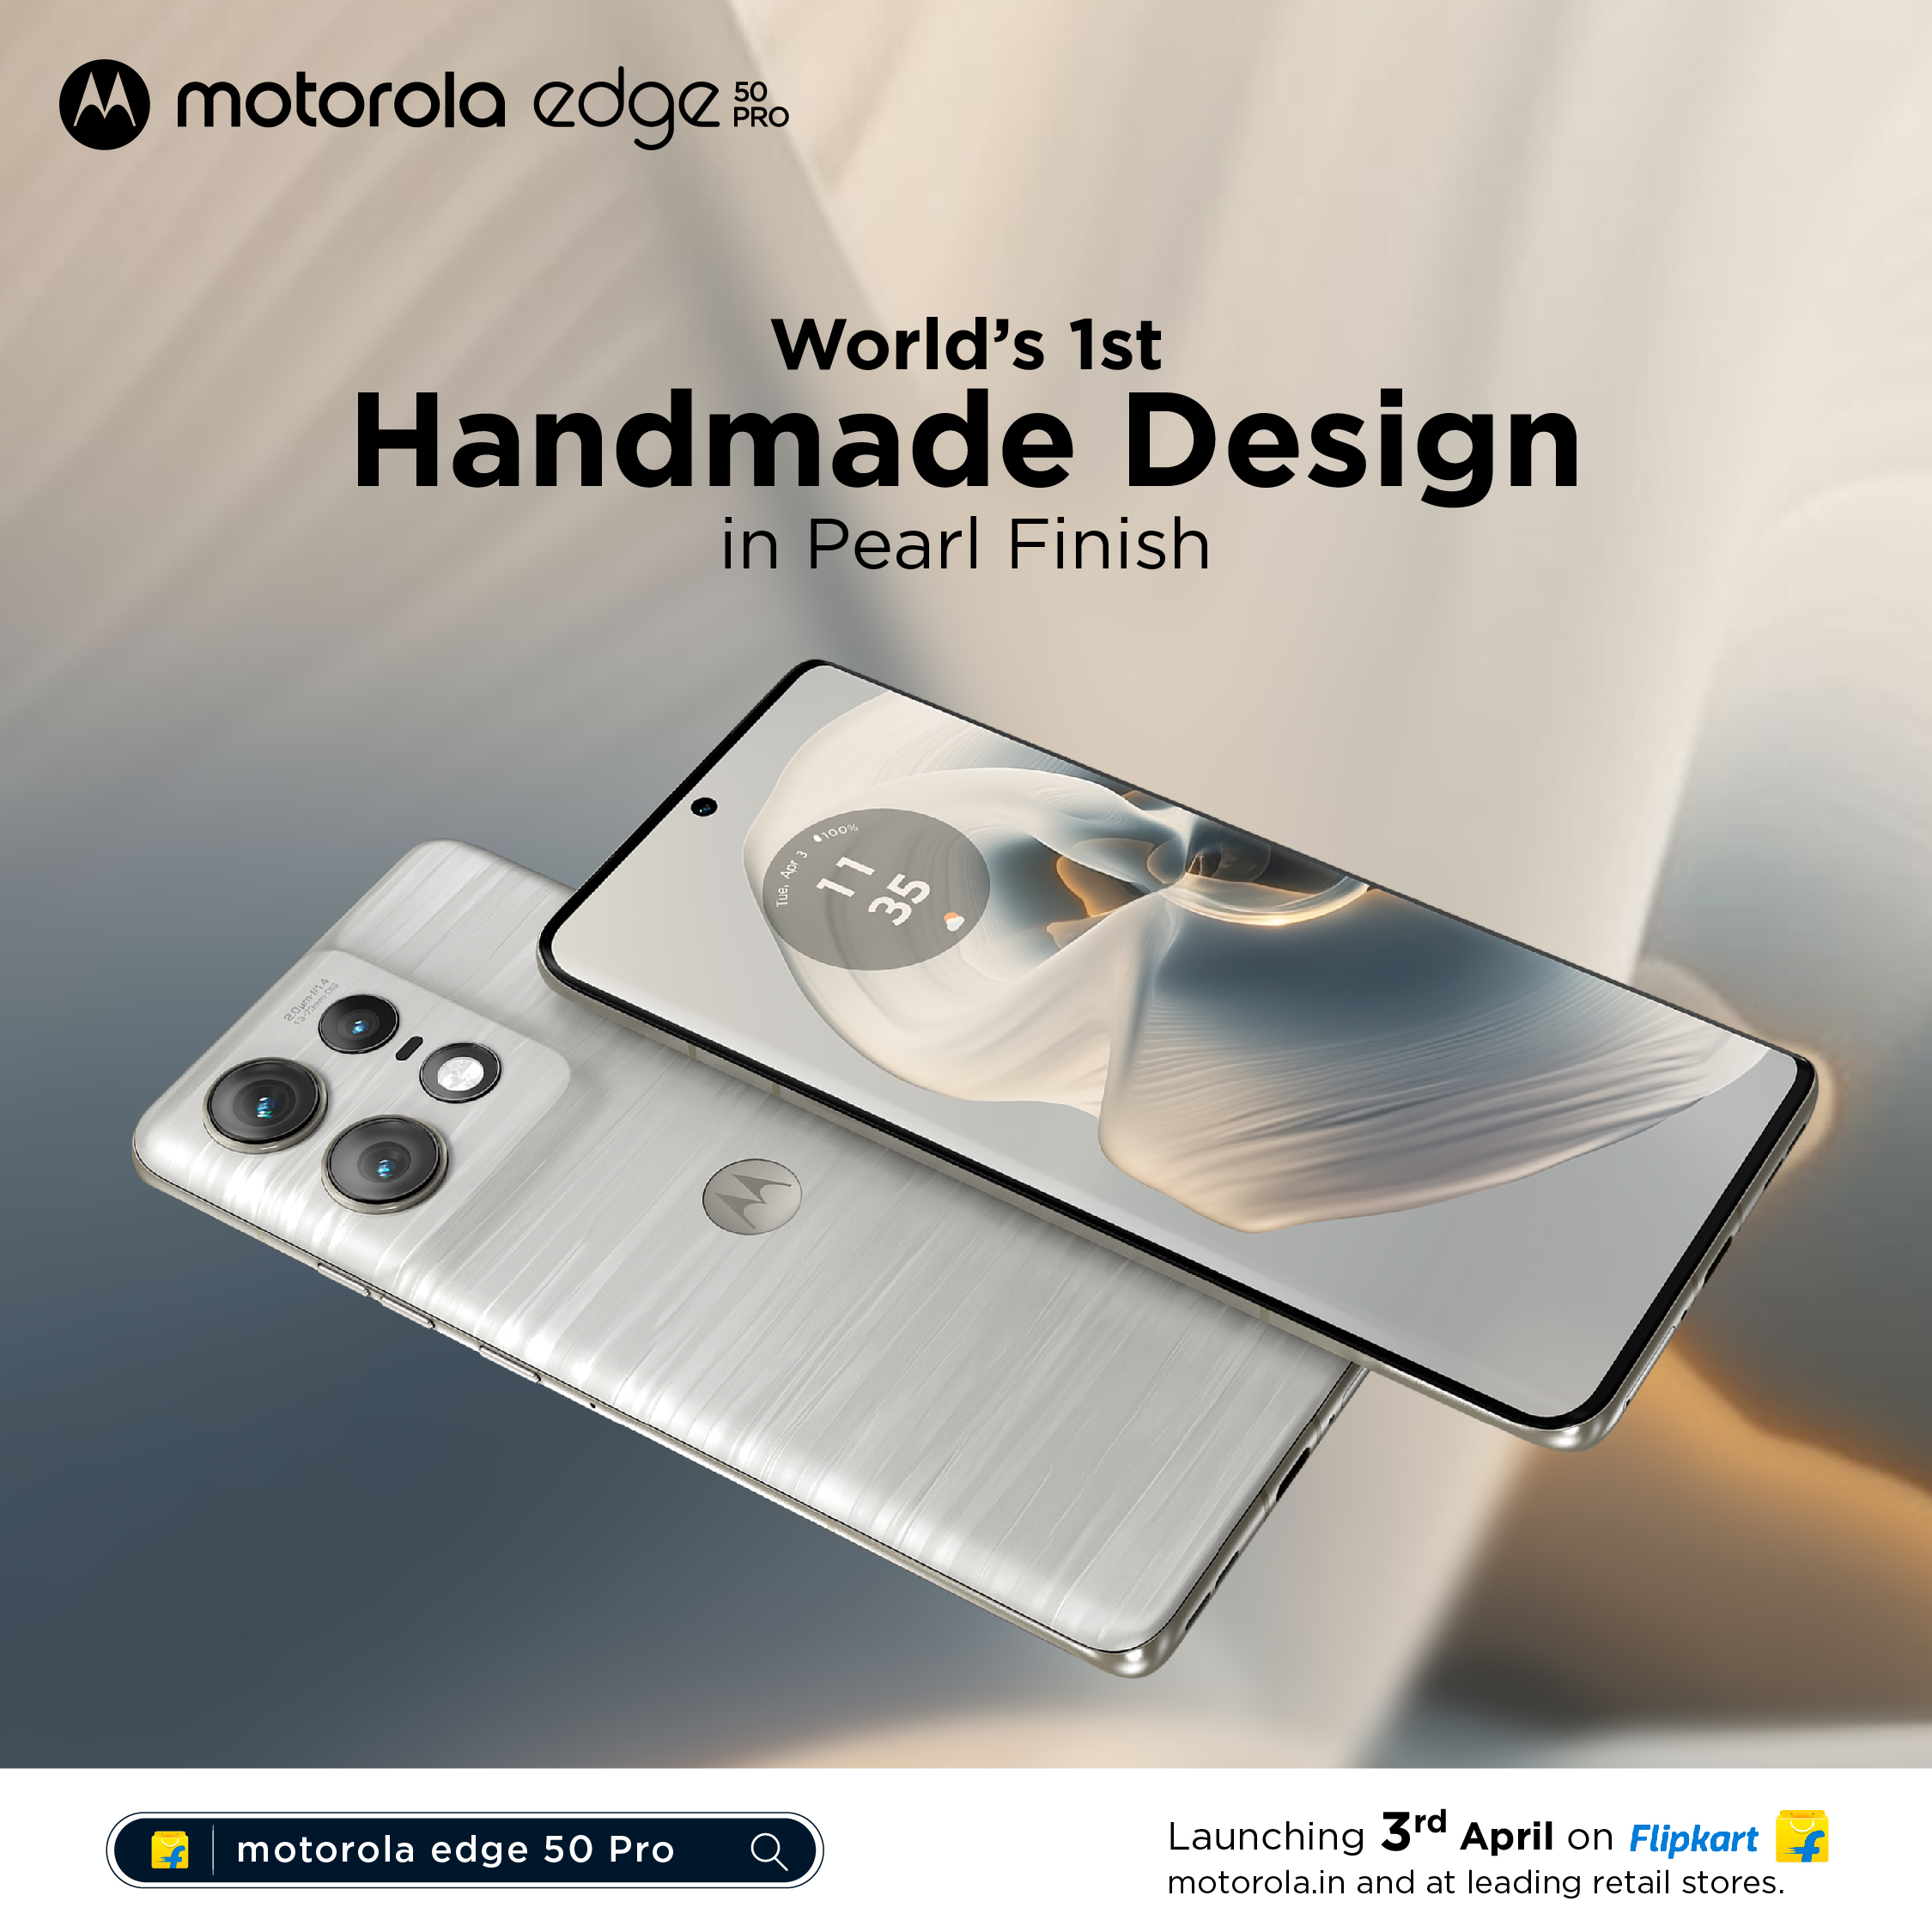 Motorola has launched Edge 50 Pro 5G smartphone in India